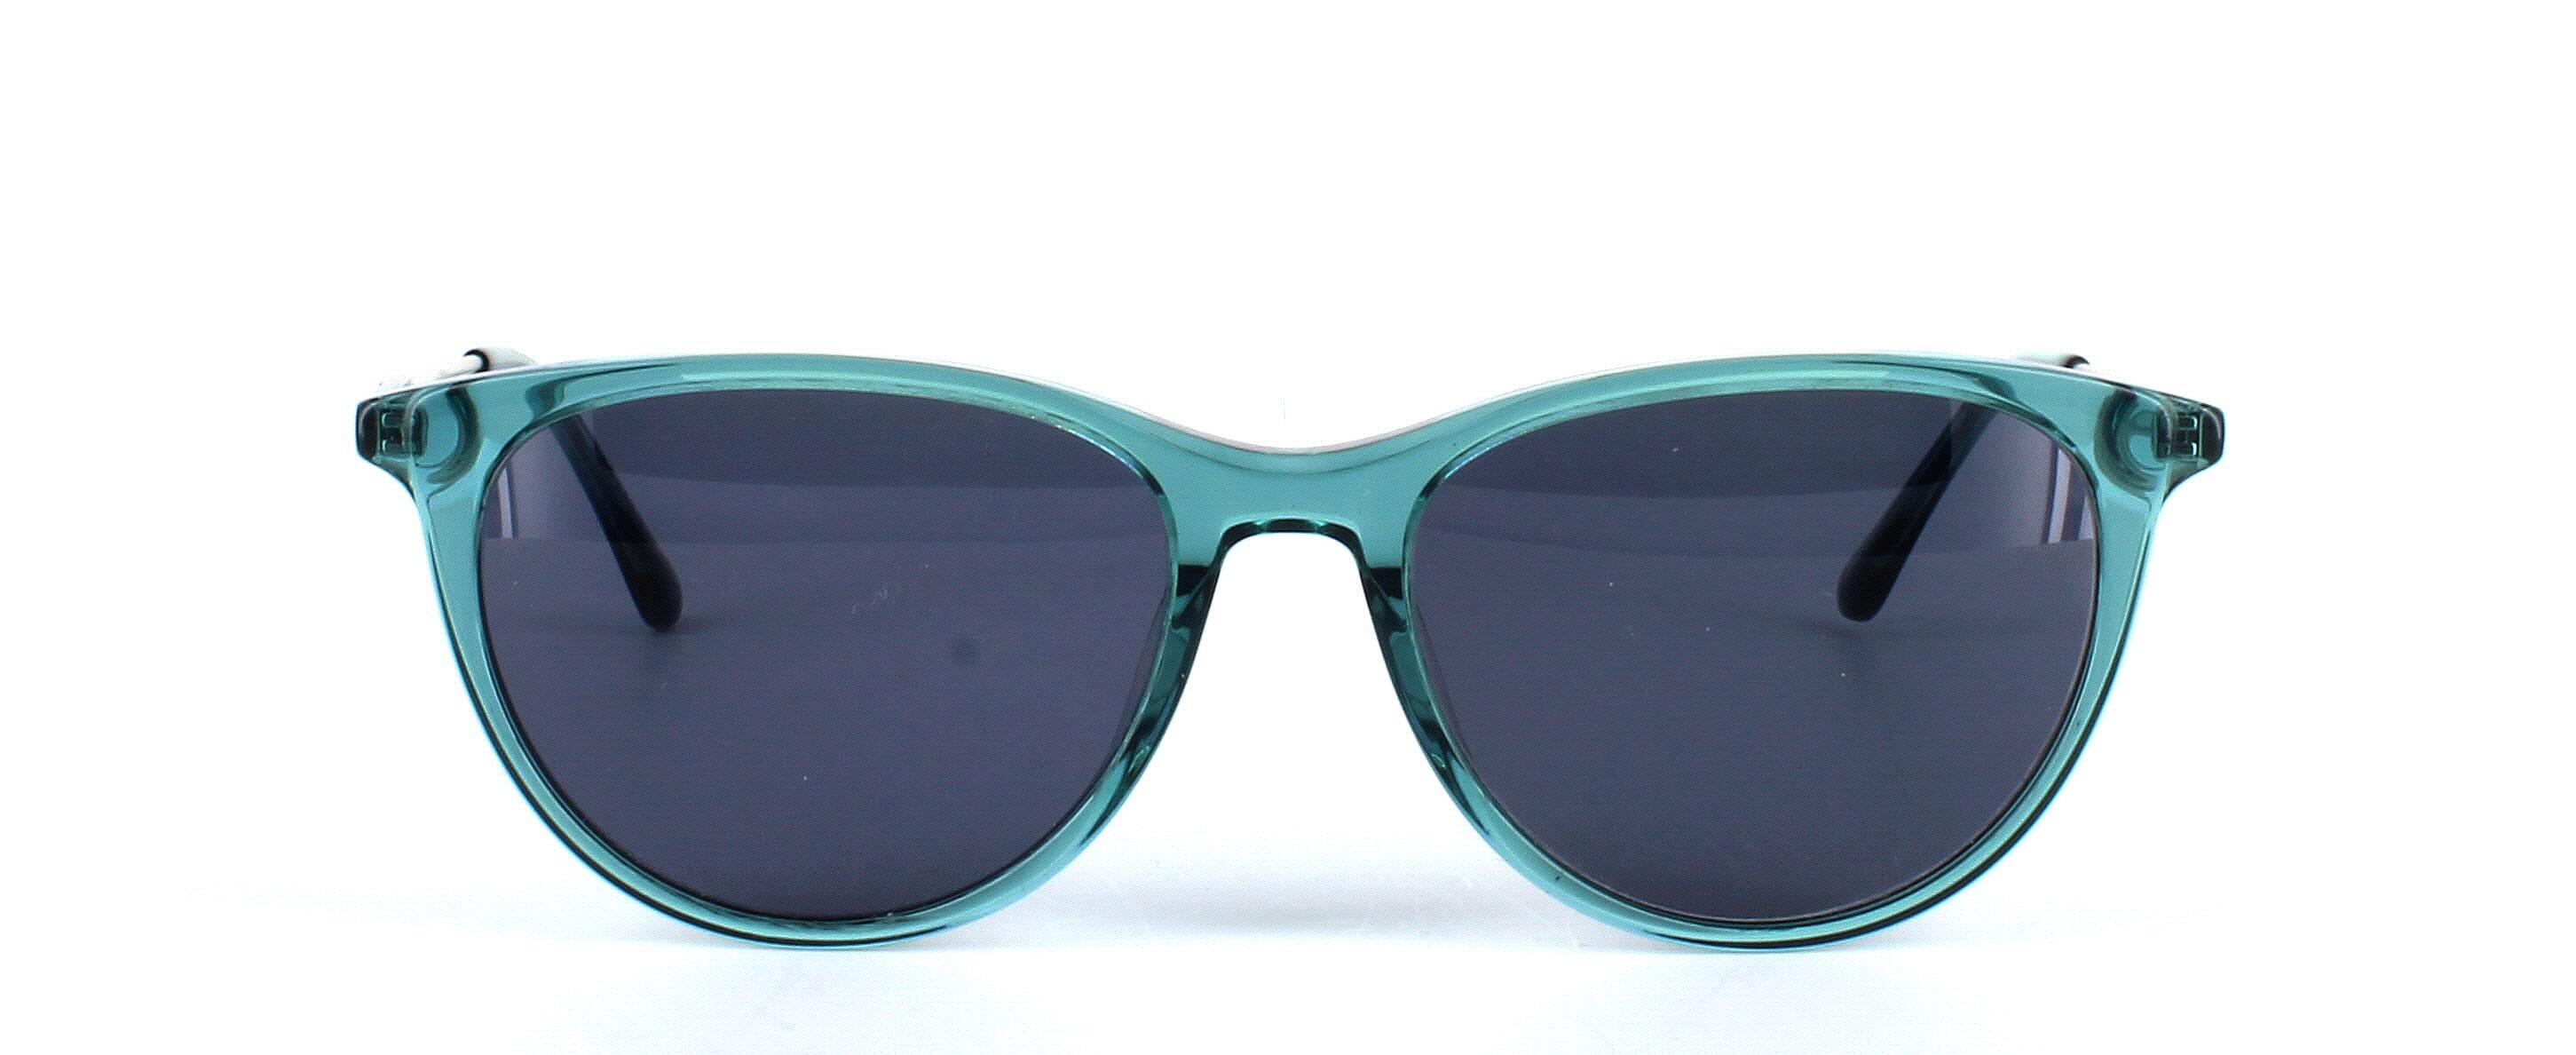 Edward Scotts BJ9202 - Prescription Sunglasses - Turquoise